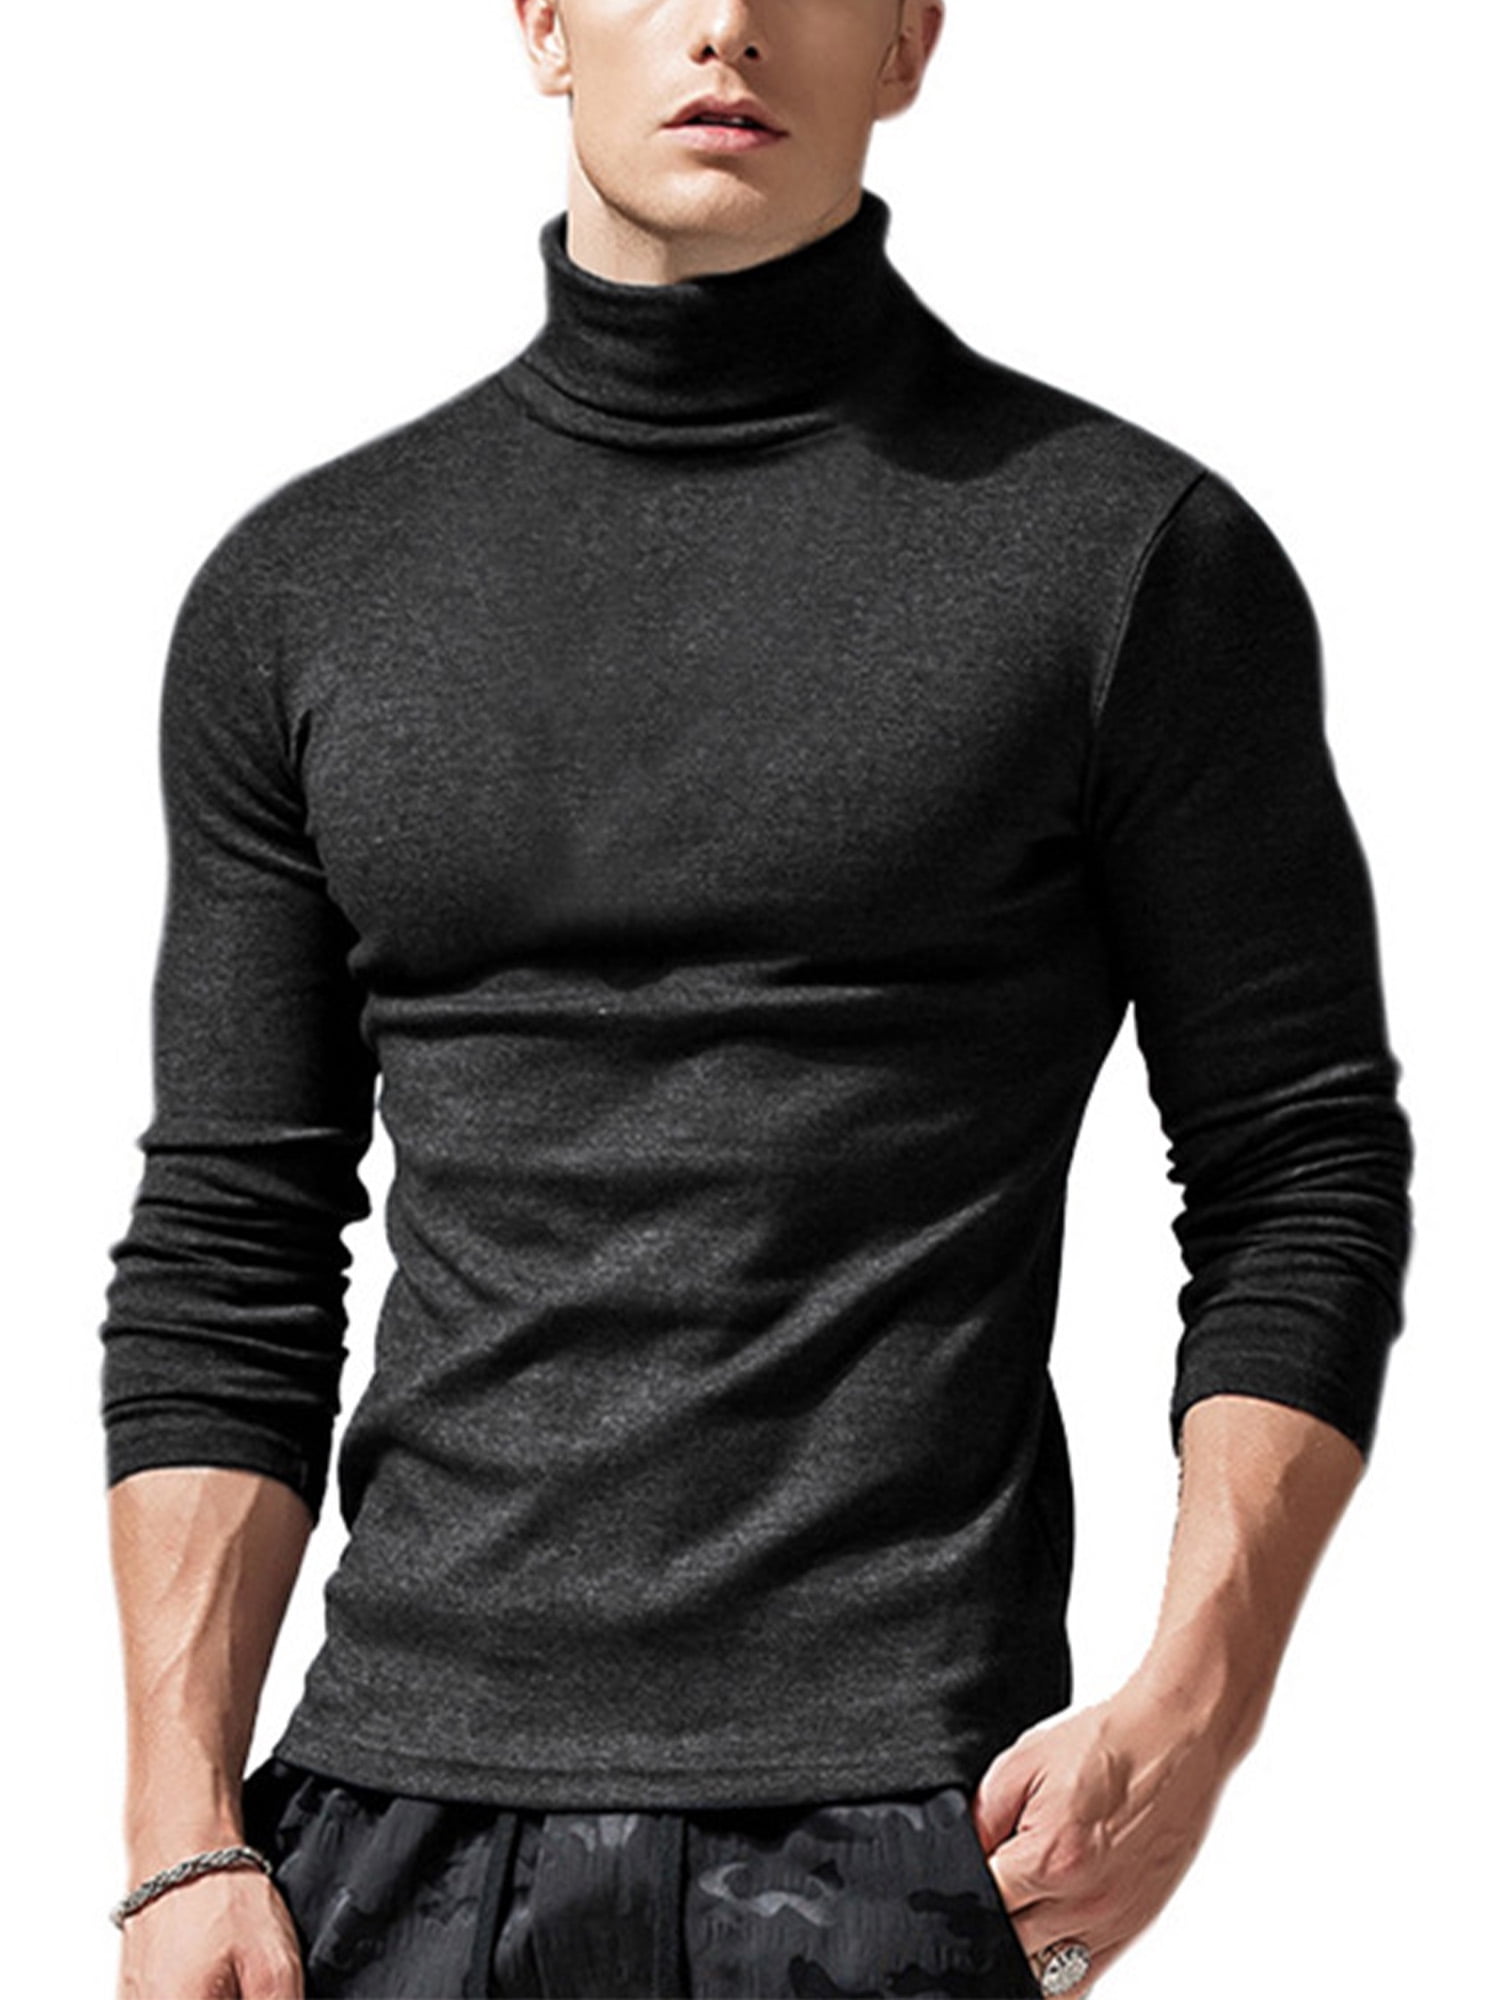 Andopa Mens Turtleneck Knit Pullover Long Sleeve Pullover Tshirt Top